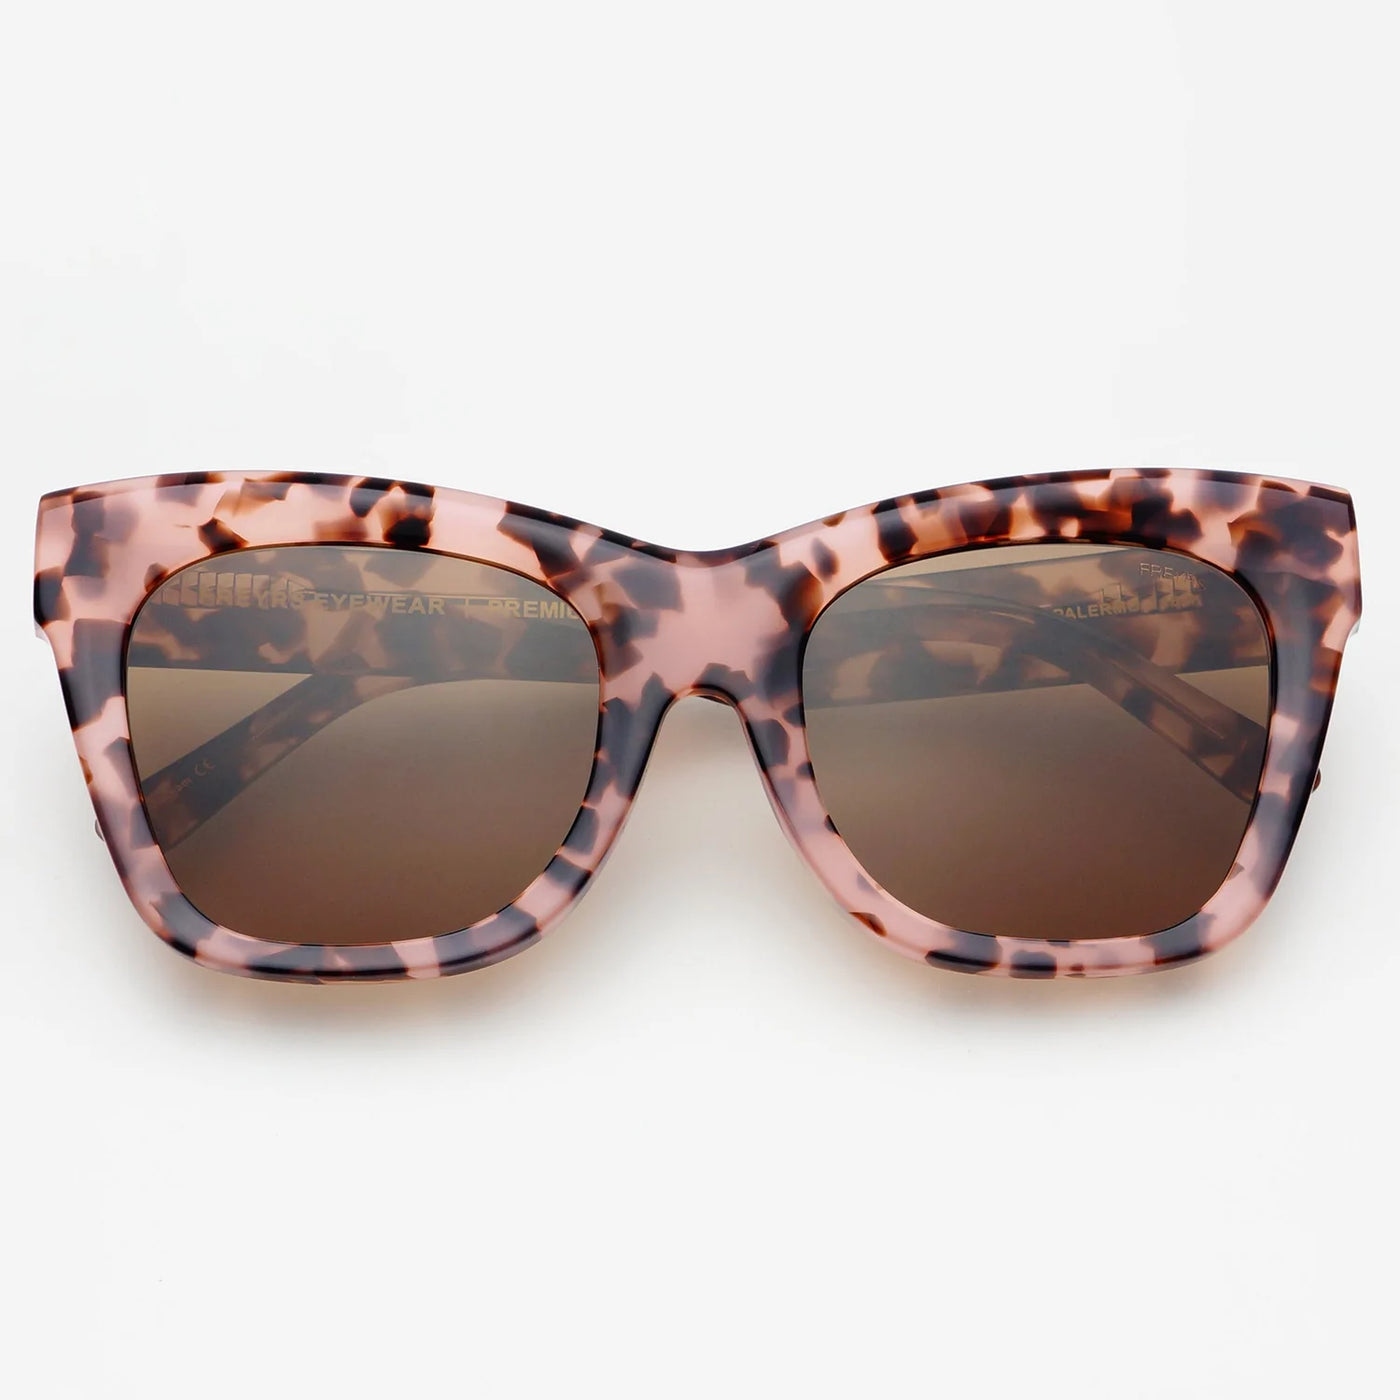 Palermo Sunglasses (Pink Tortoise)